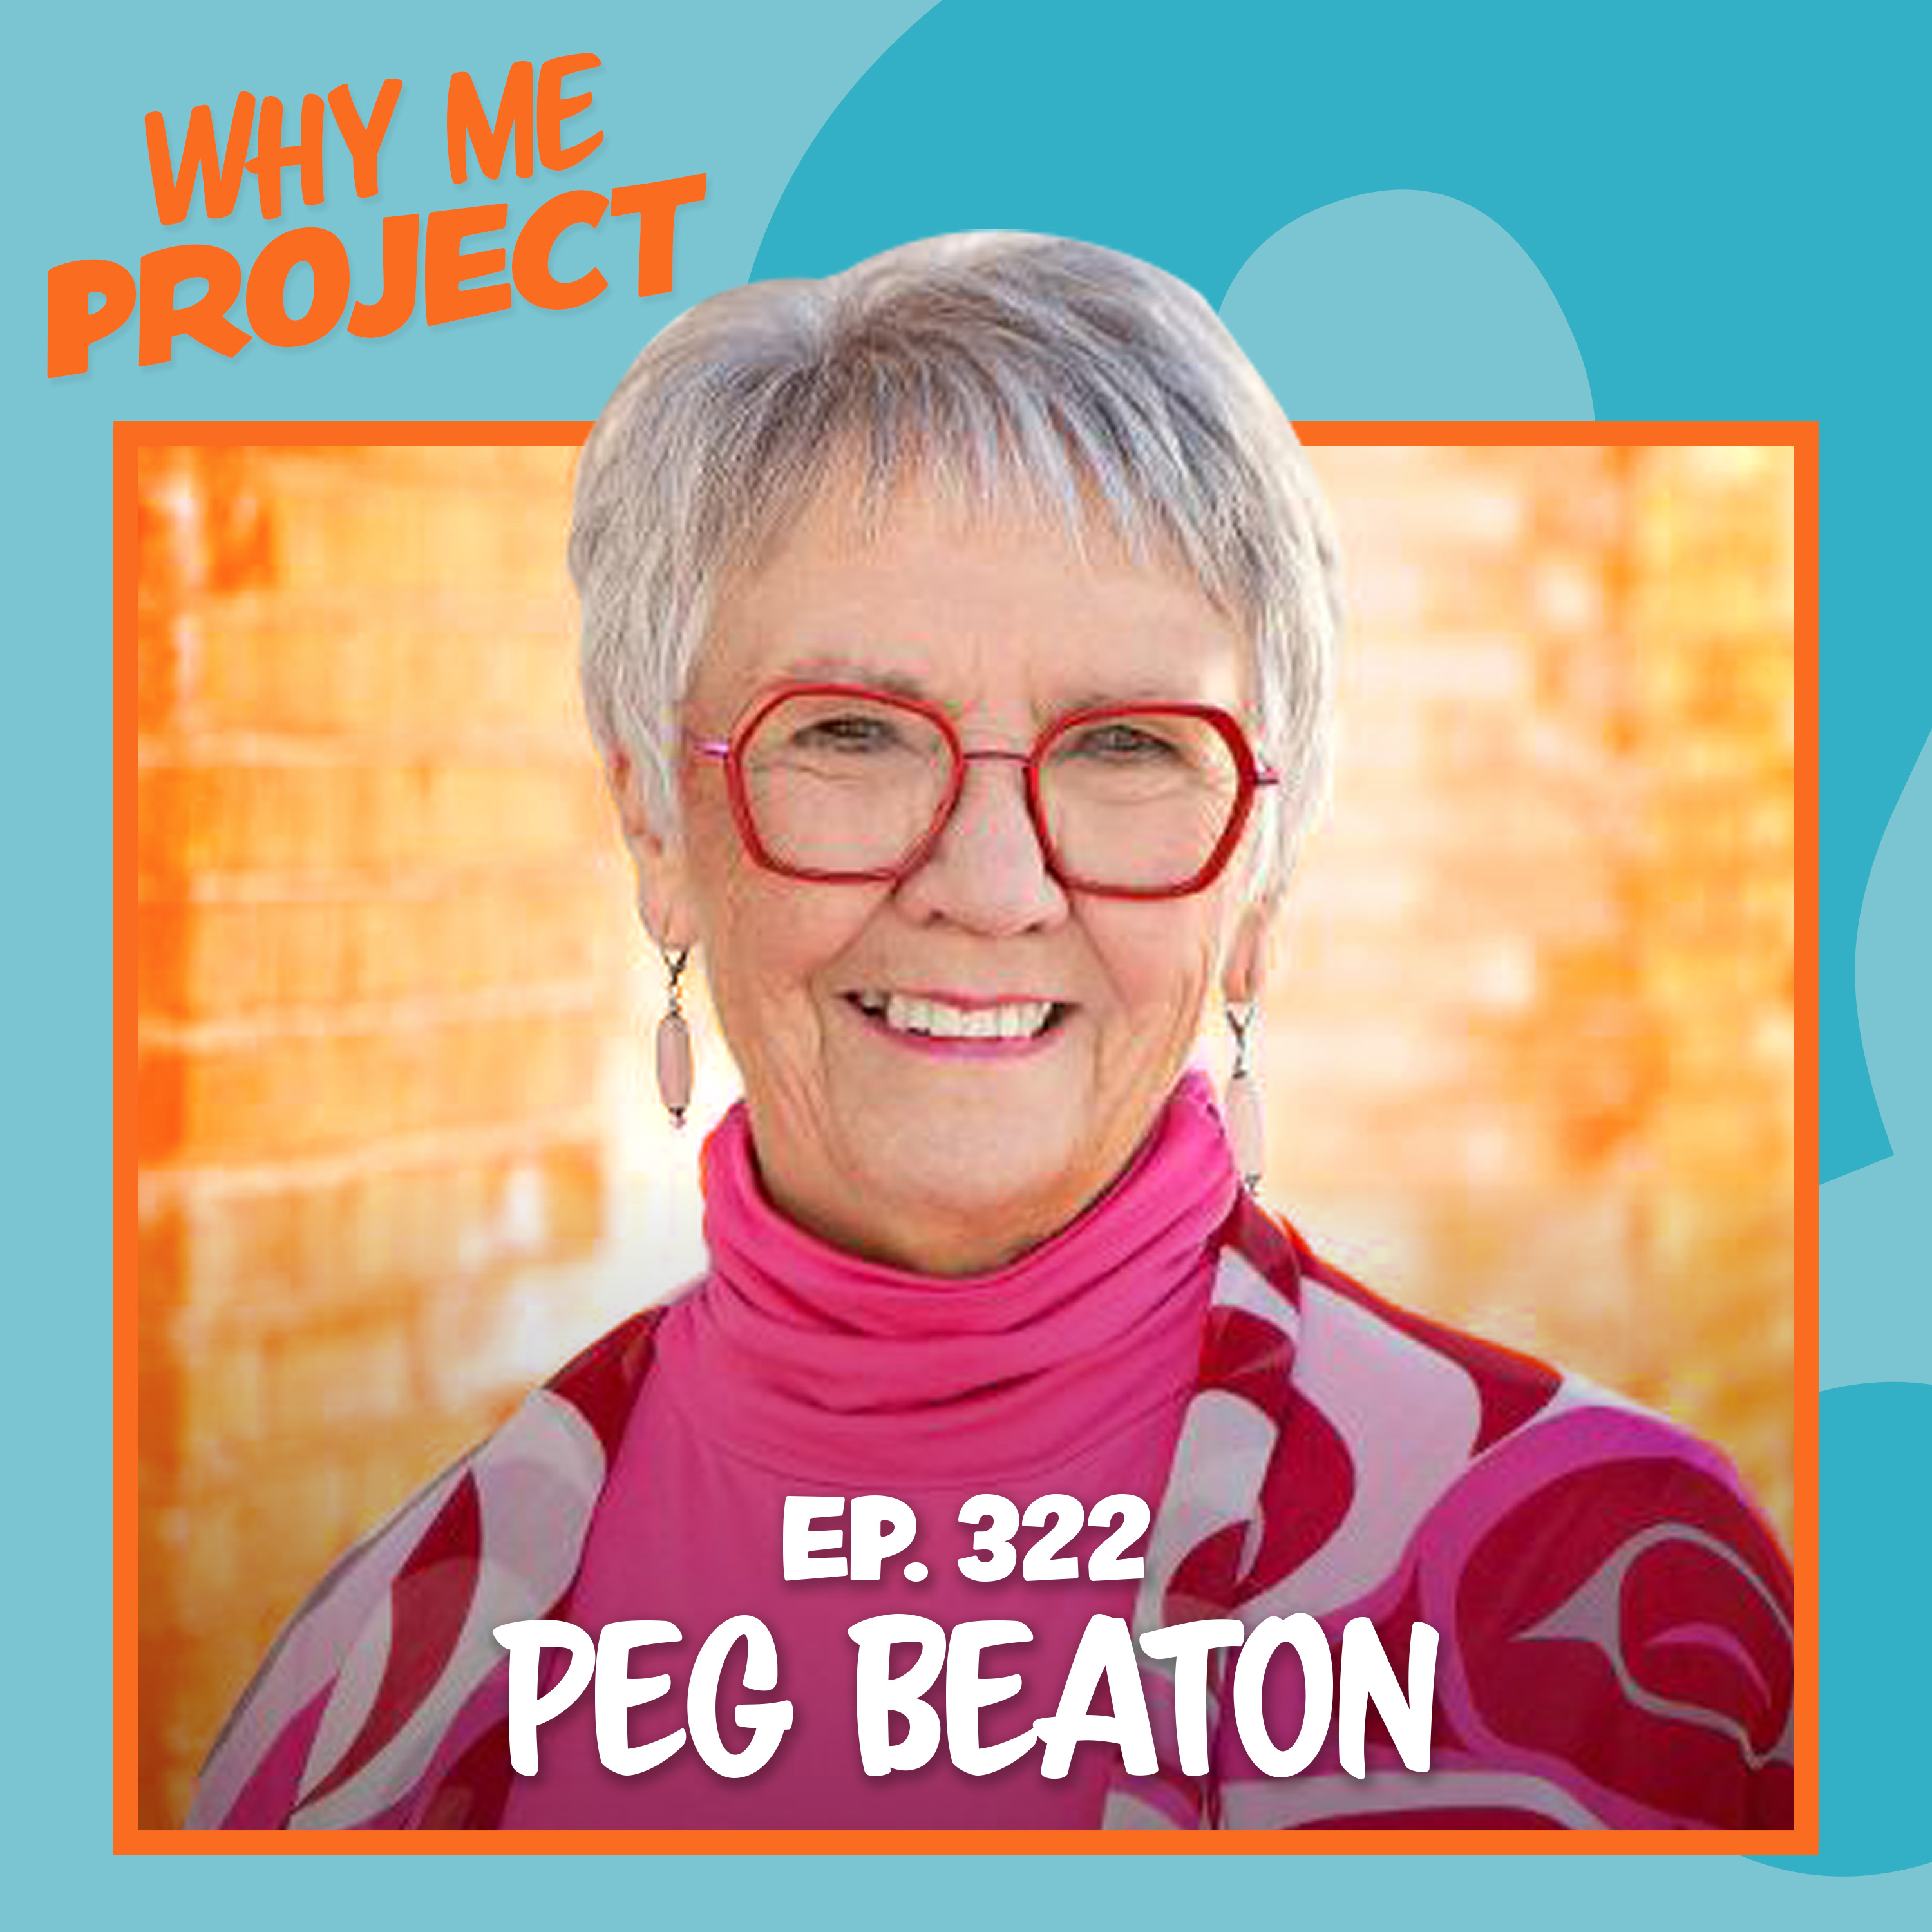 Peg Beaton